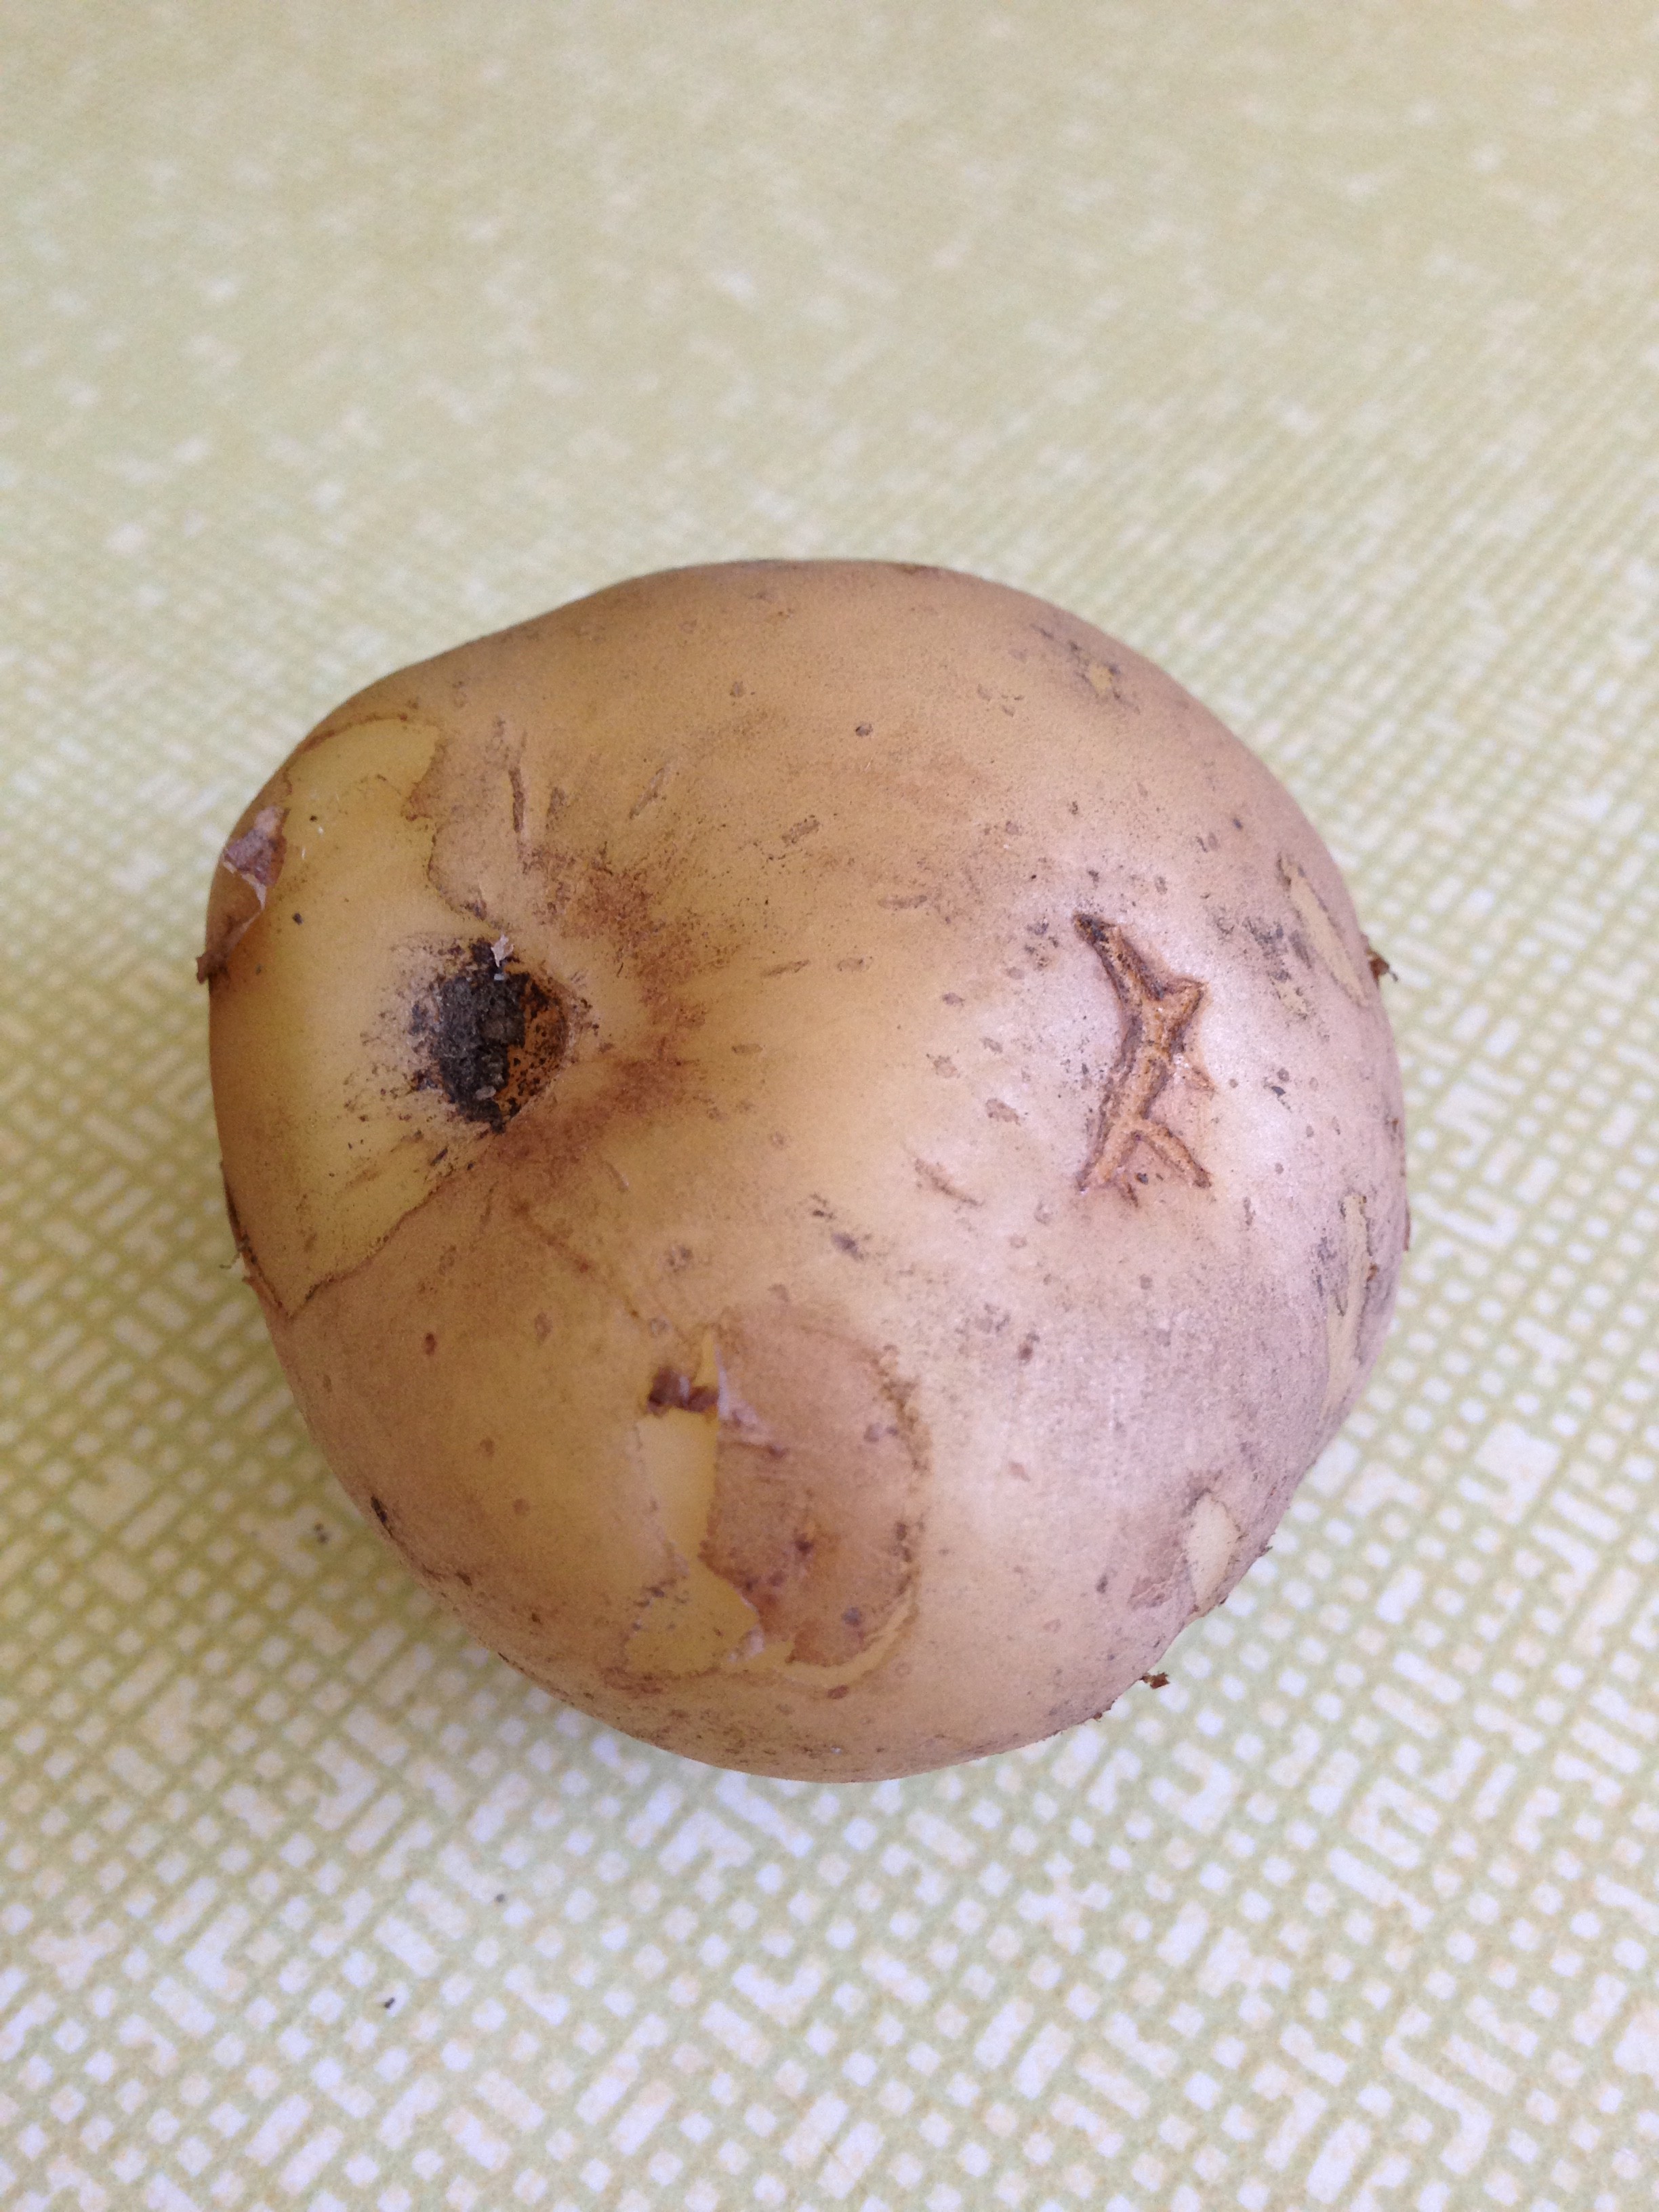 One potato…